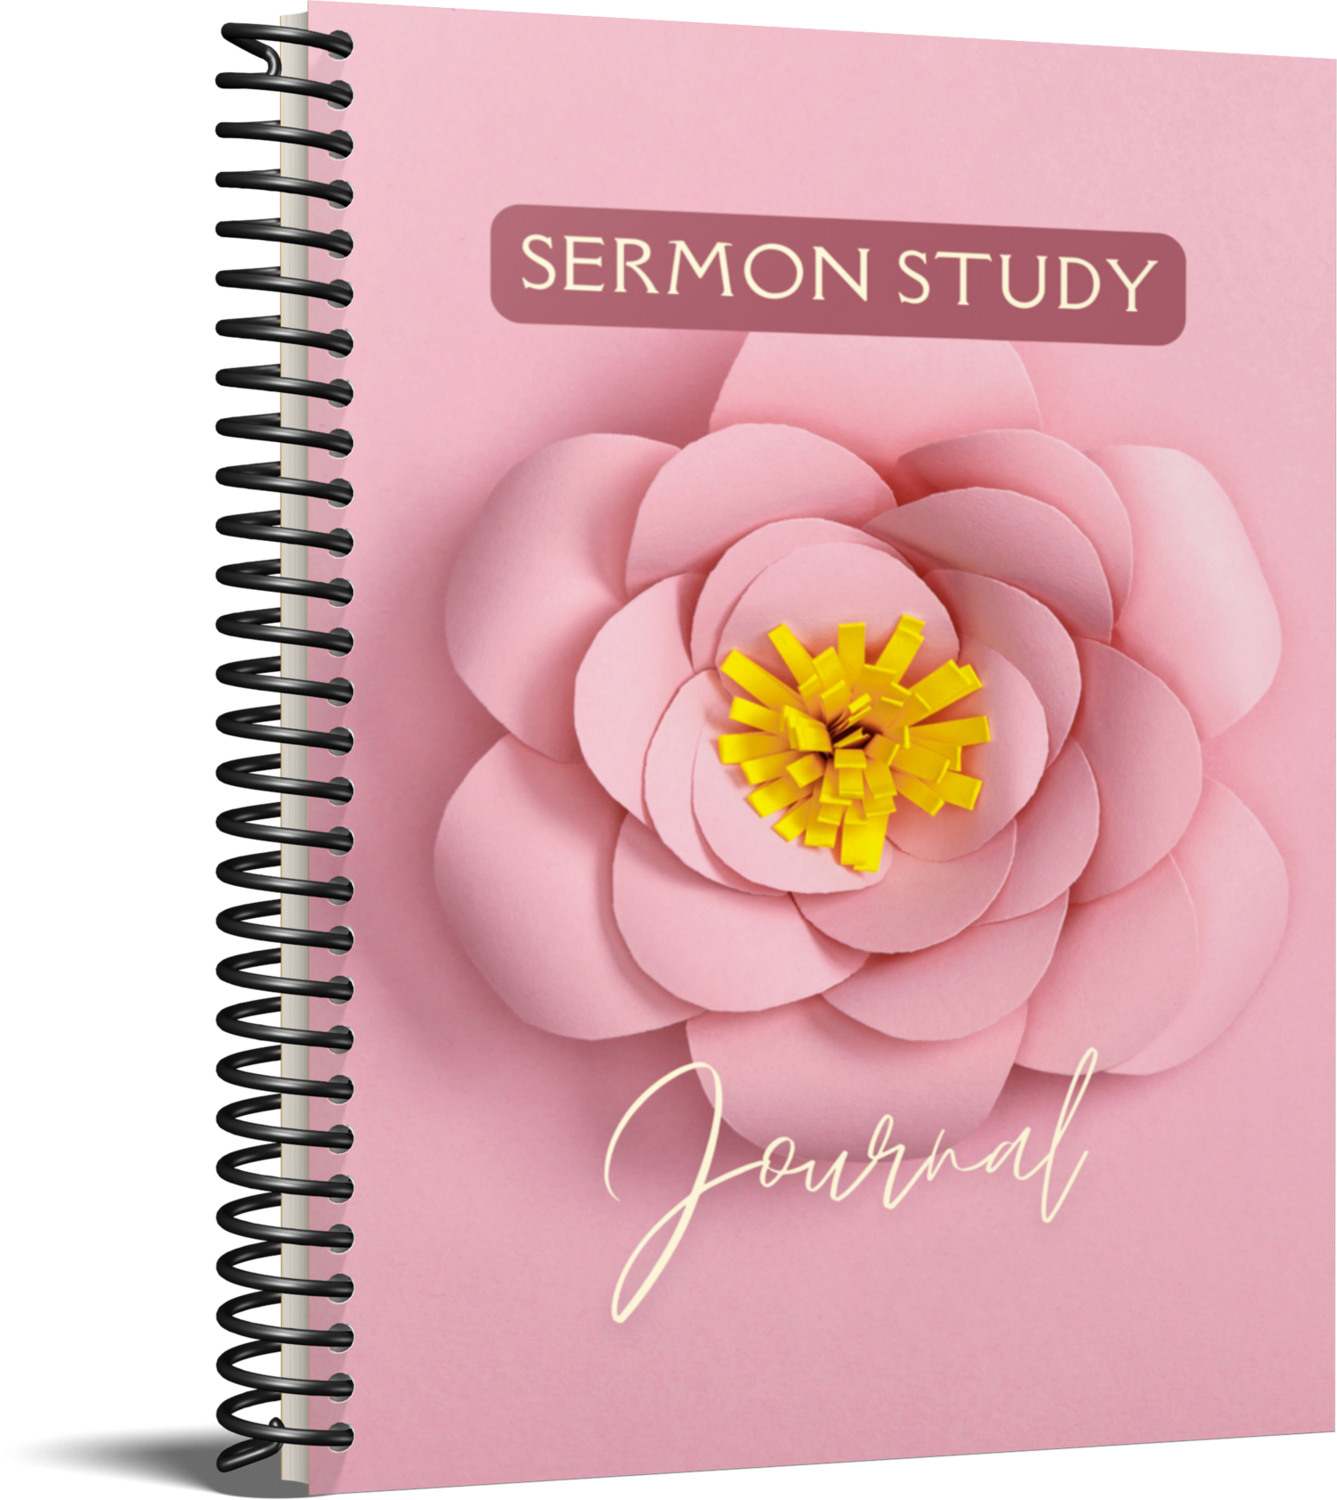 Spiral Sermon Study Journal